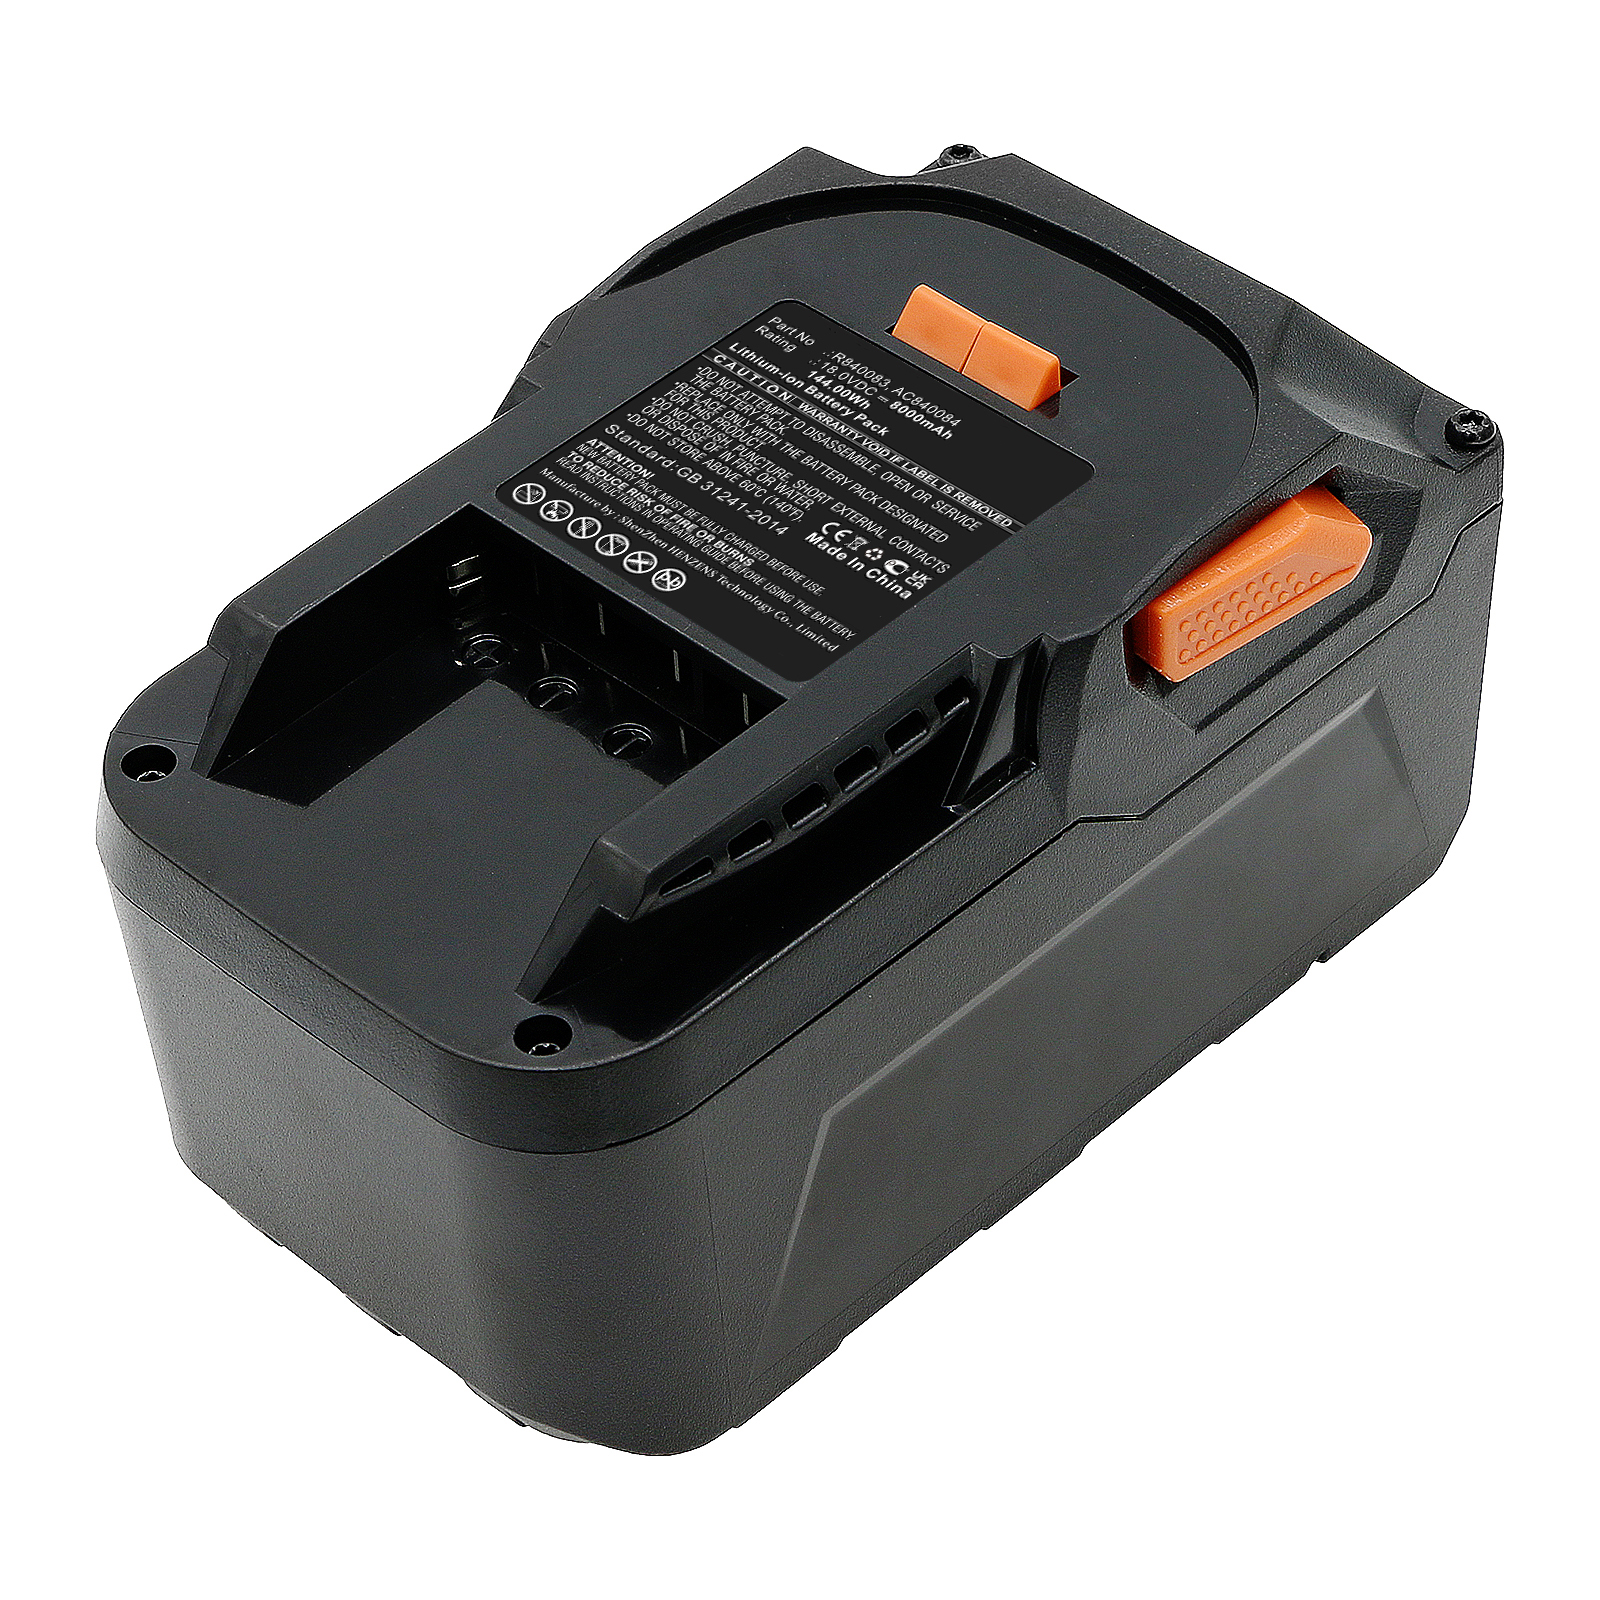 Batteries for AEGPower Tool